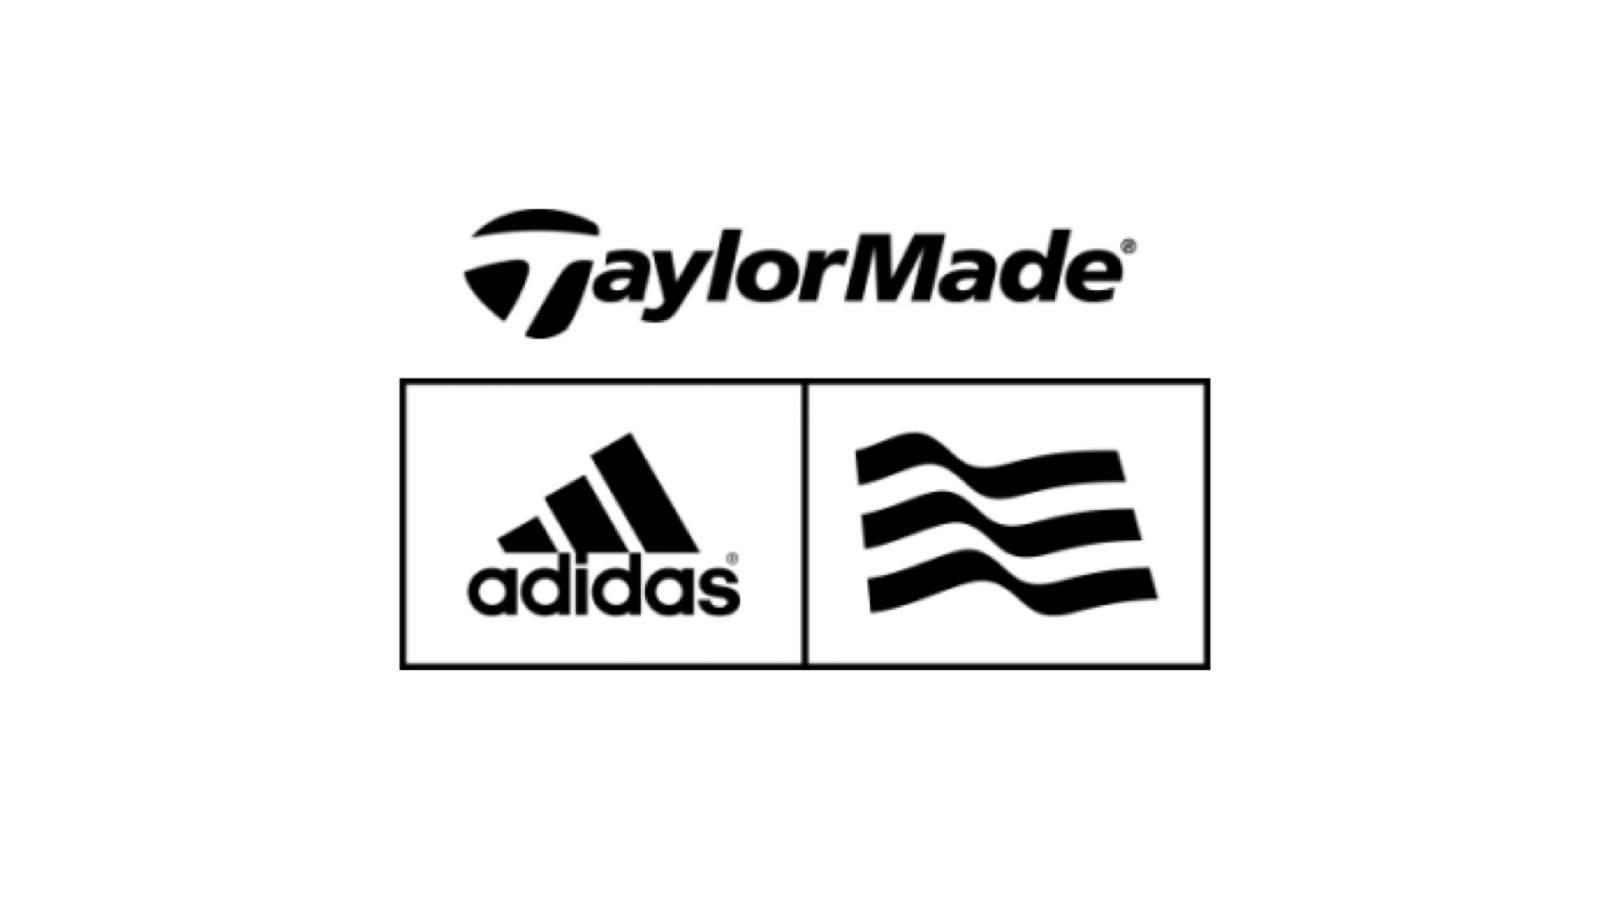 TaylorMade Adidas